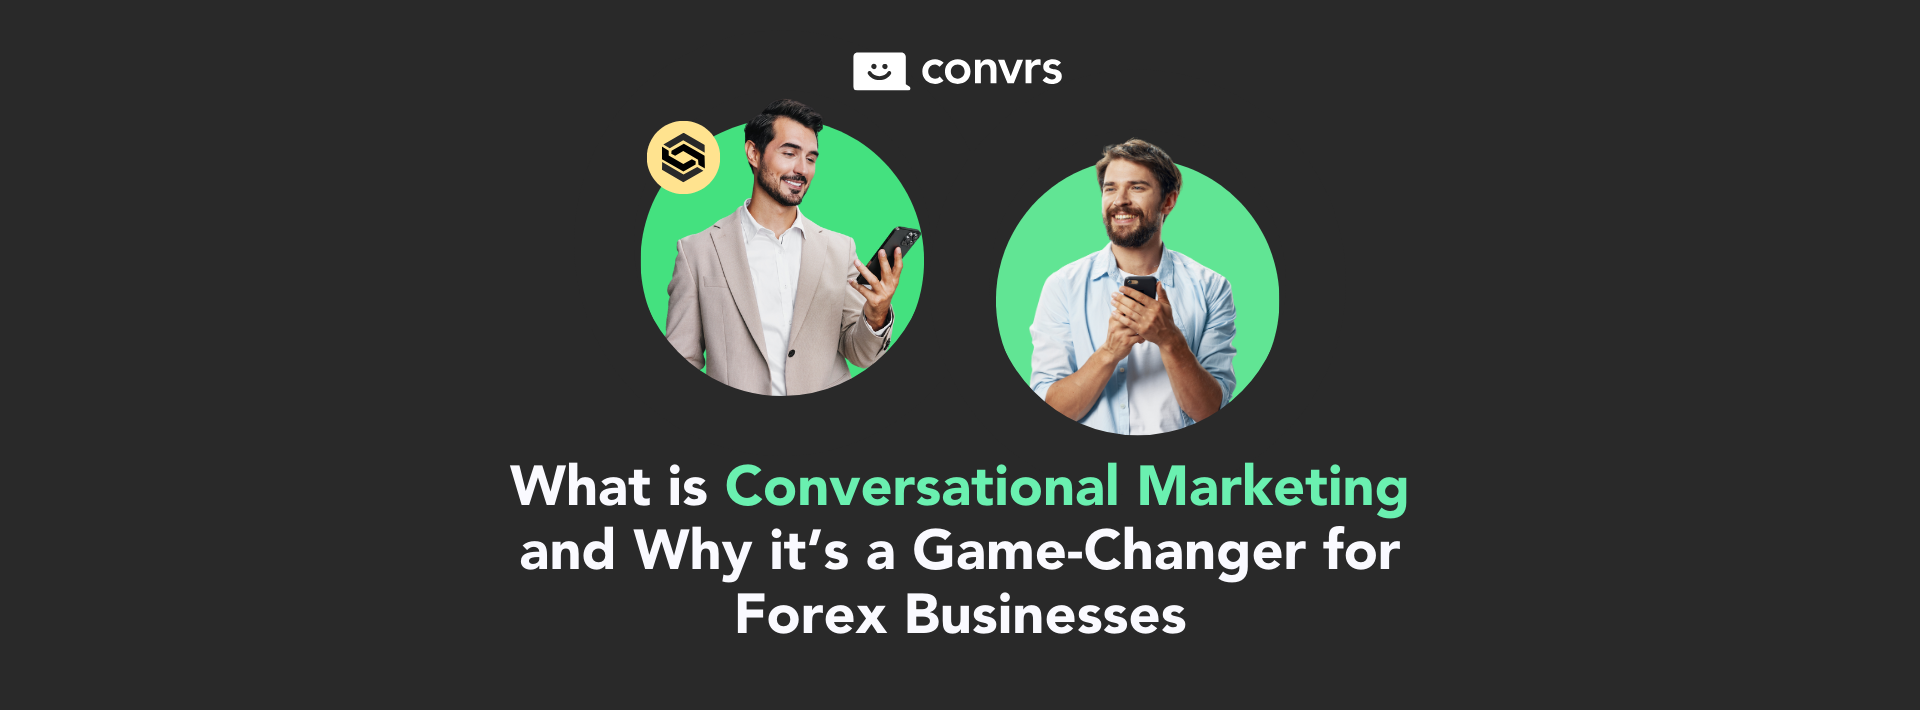 Forex Broker communicating with customer through messaging using Conversational Marketing